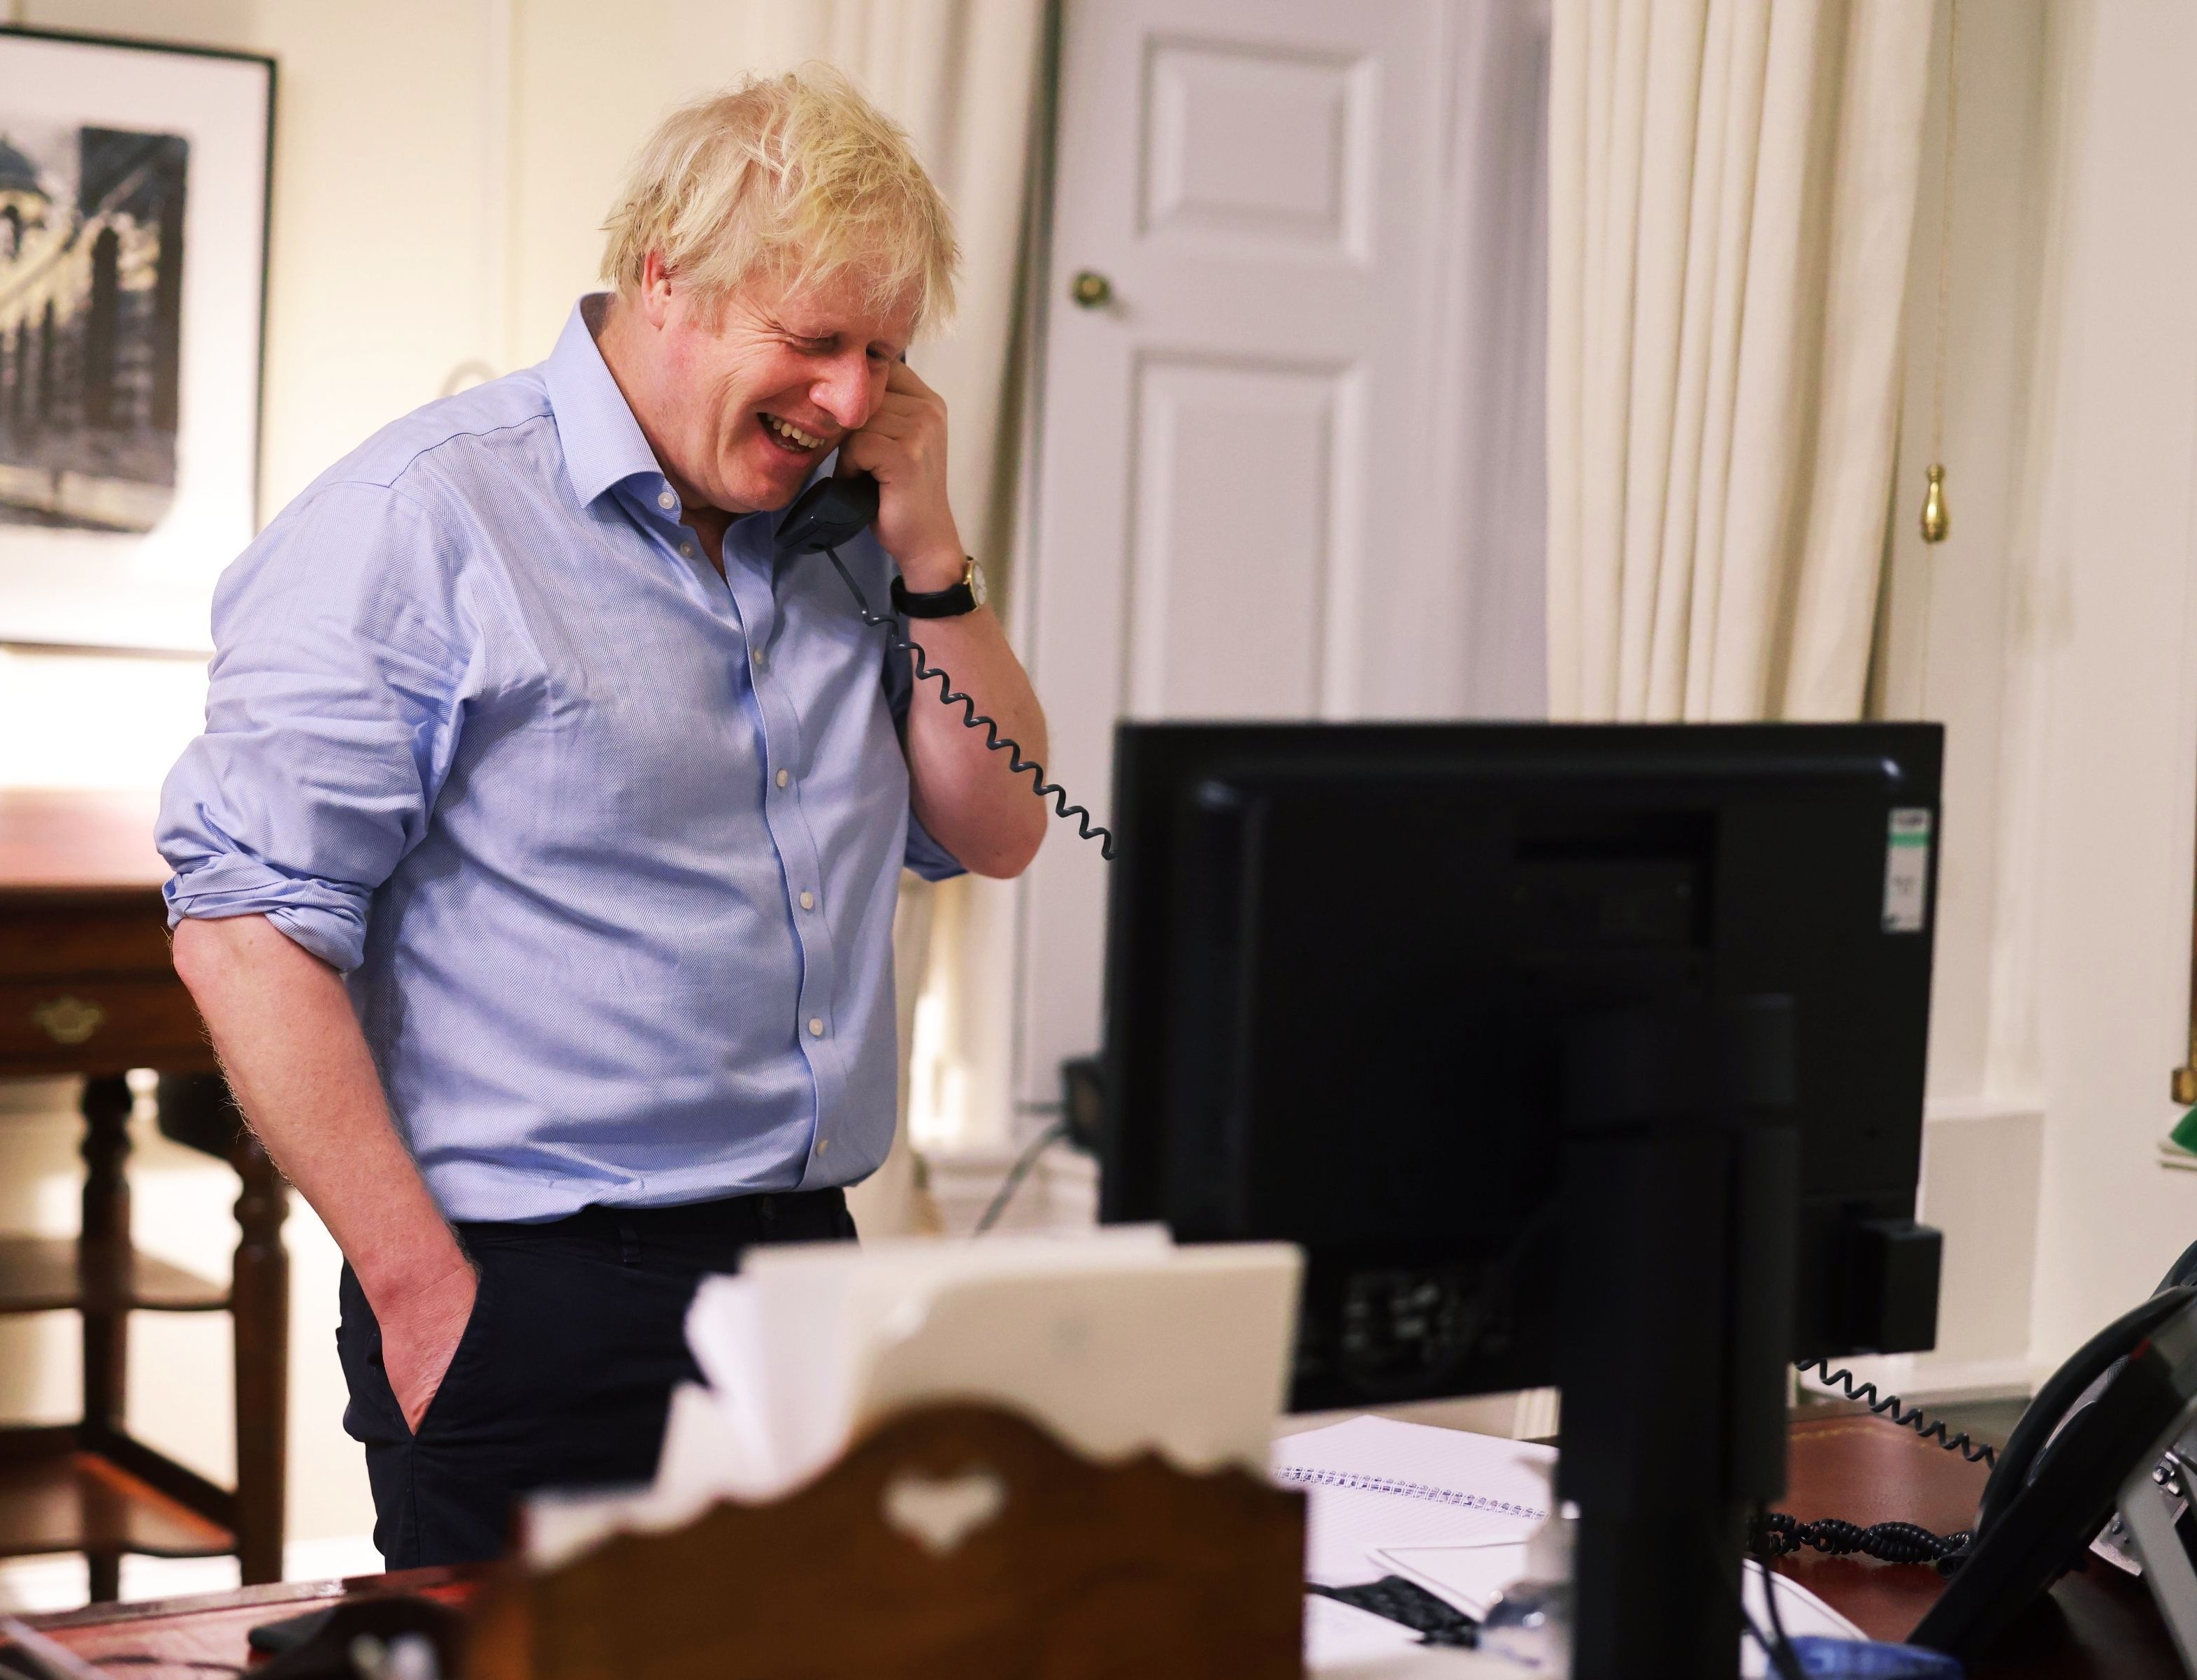 PM Inggris Boris Johnson sedang menelepon. Foto ini diposting Johnson di akun Twitter-nya usai menelepon Presiden AS Joe Biden / Foto: @BorisJohnson